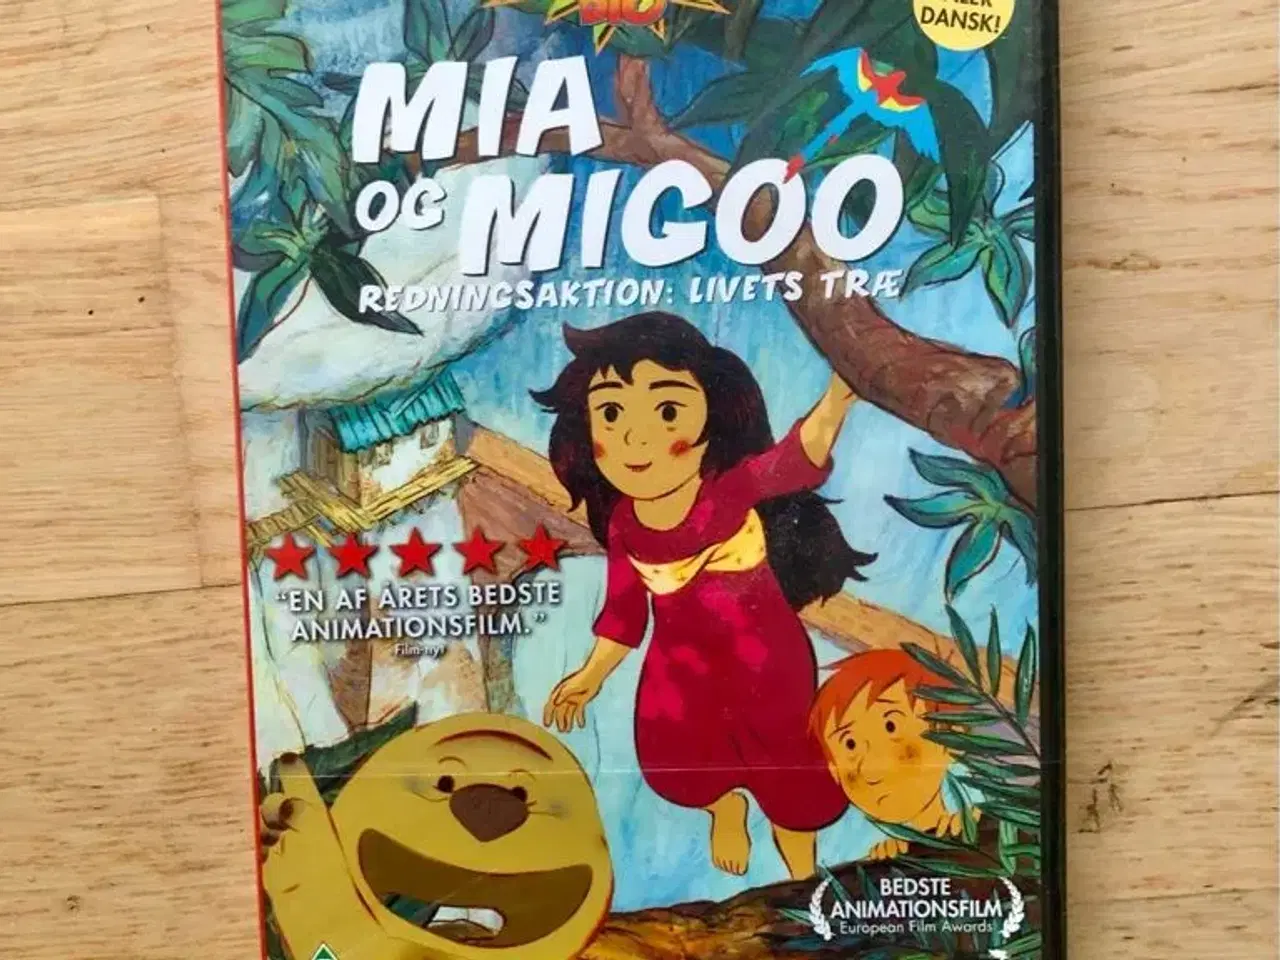 Billede 1 - Mia og Migoo, smuk animationsfilm